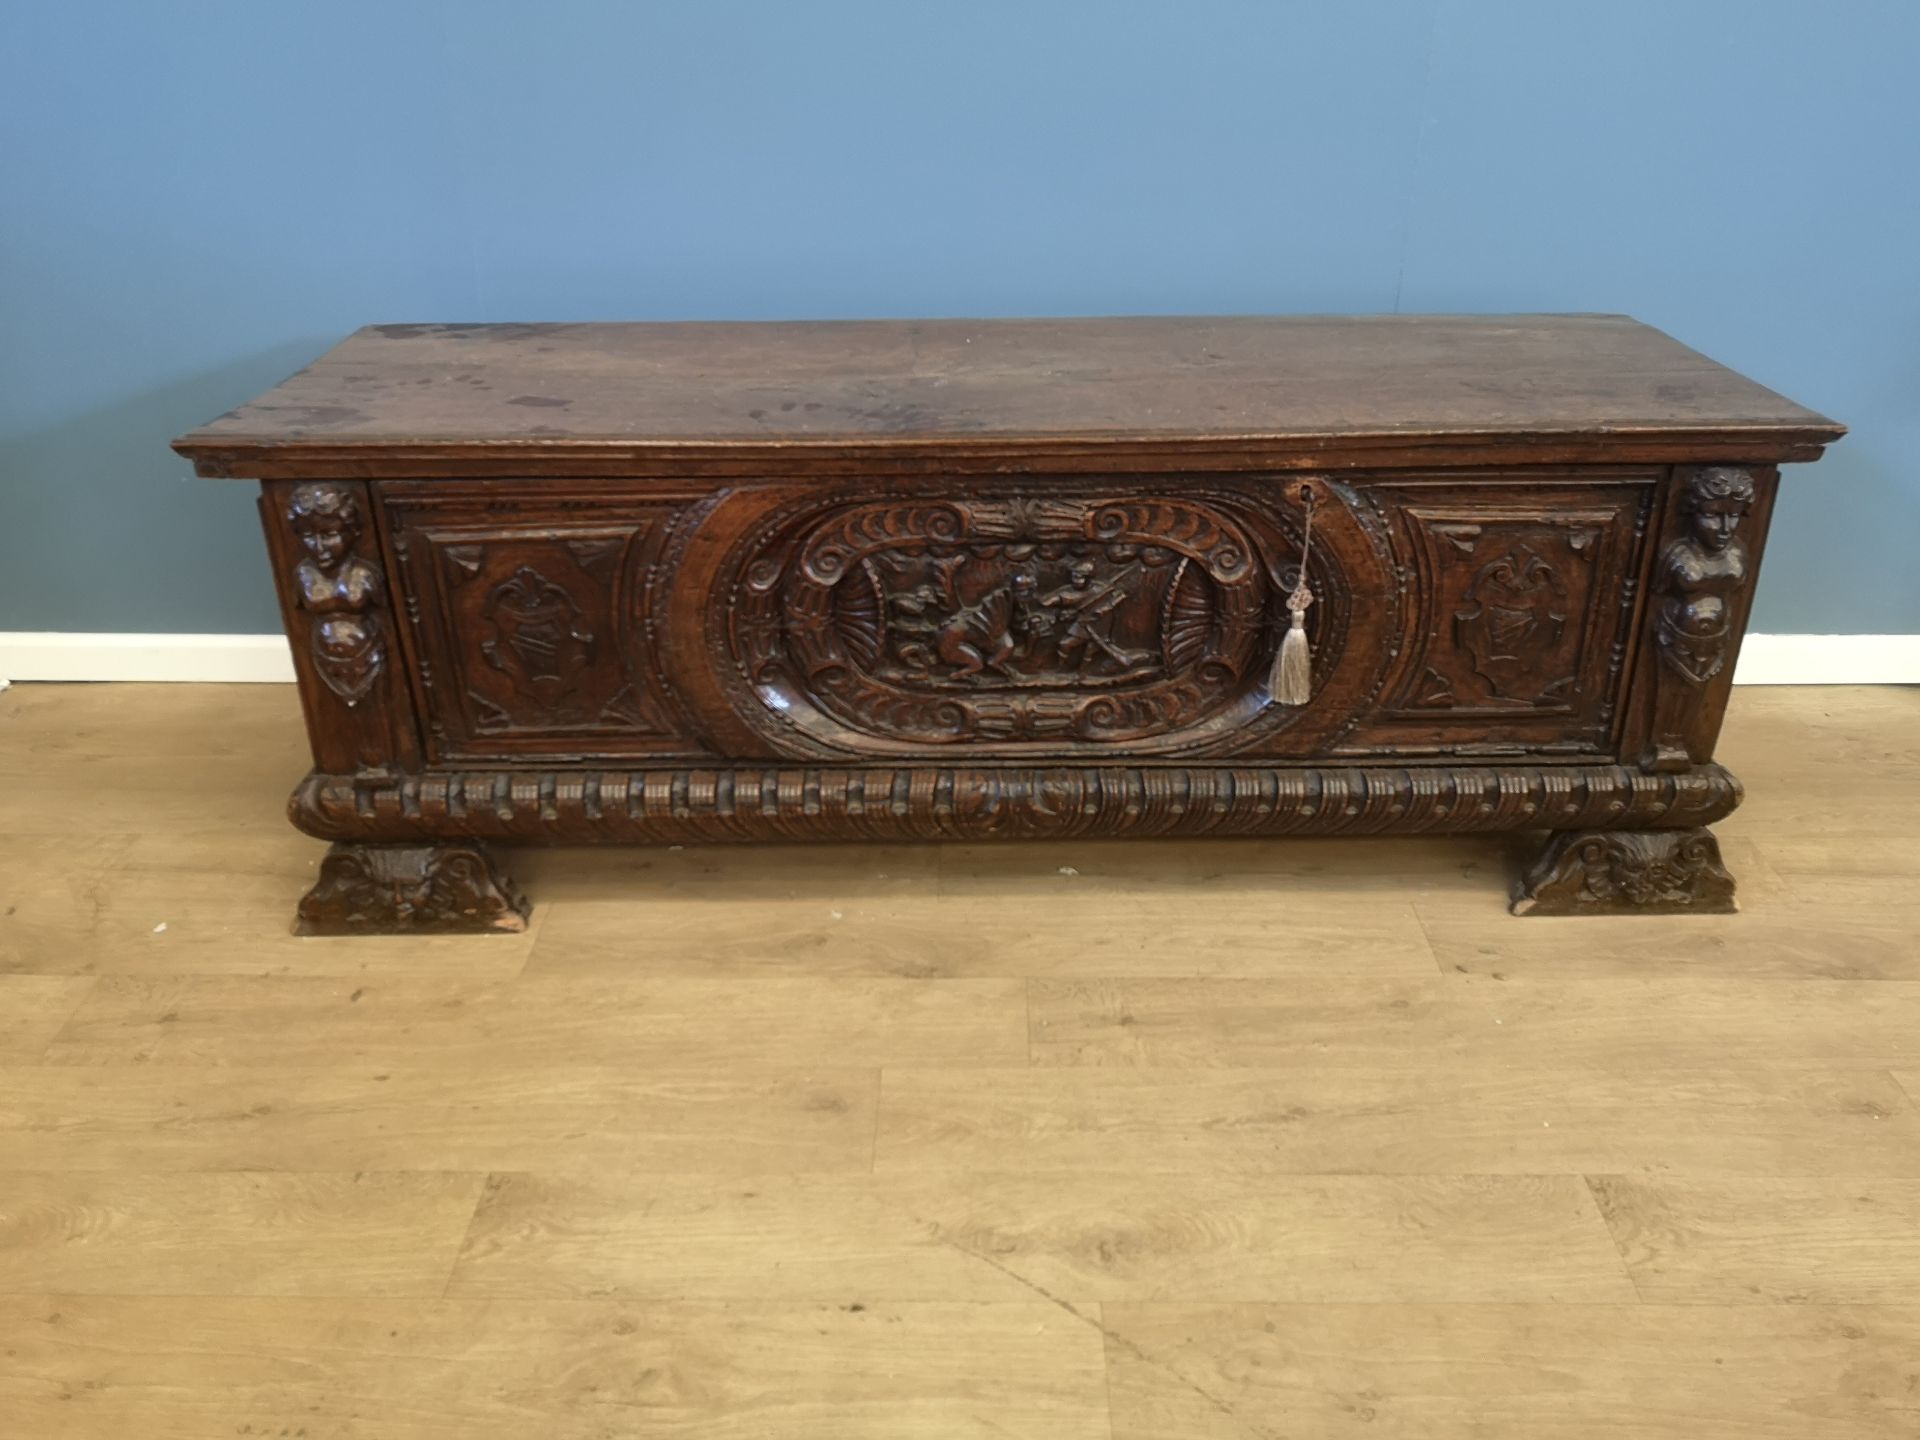 18th century oak chest